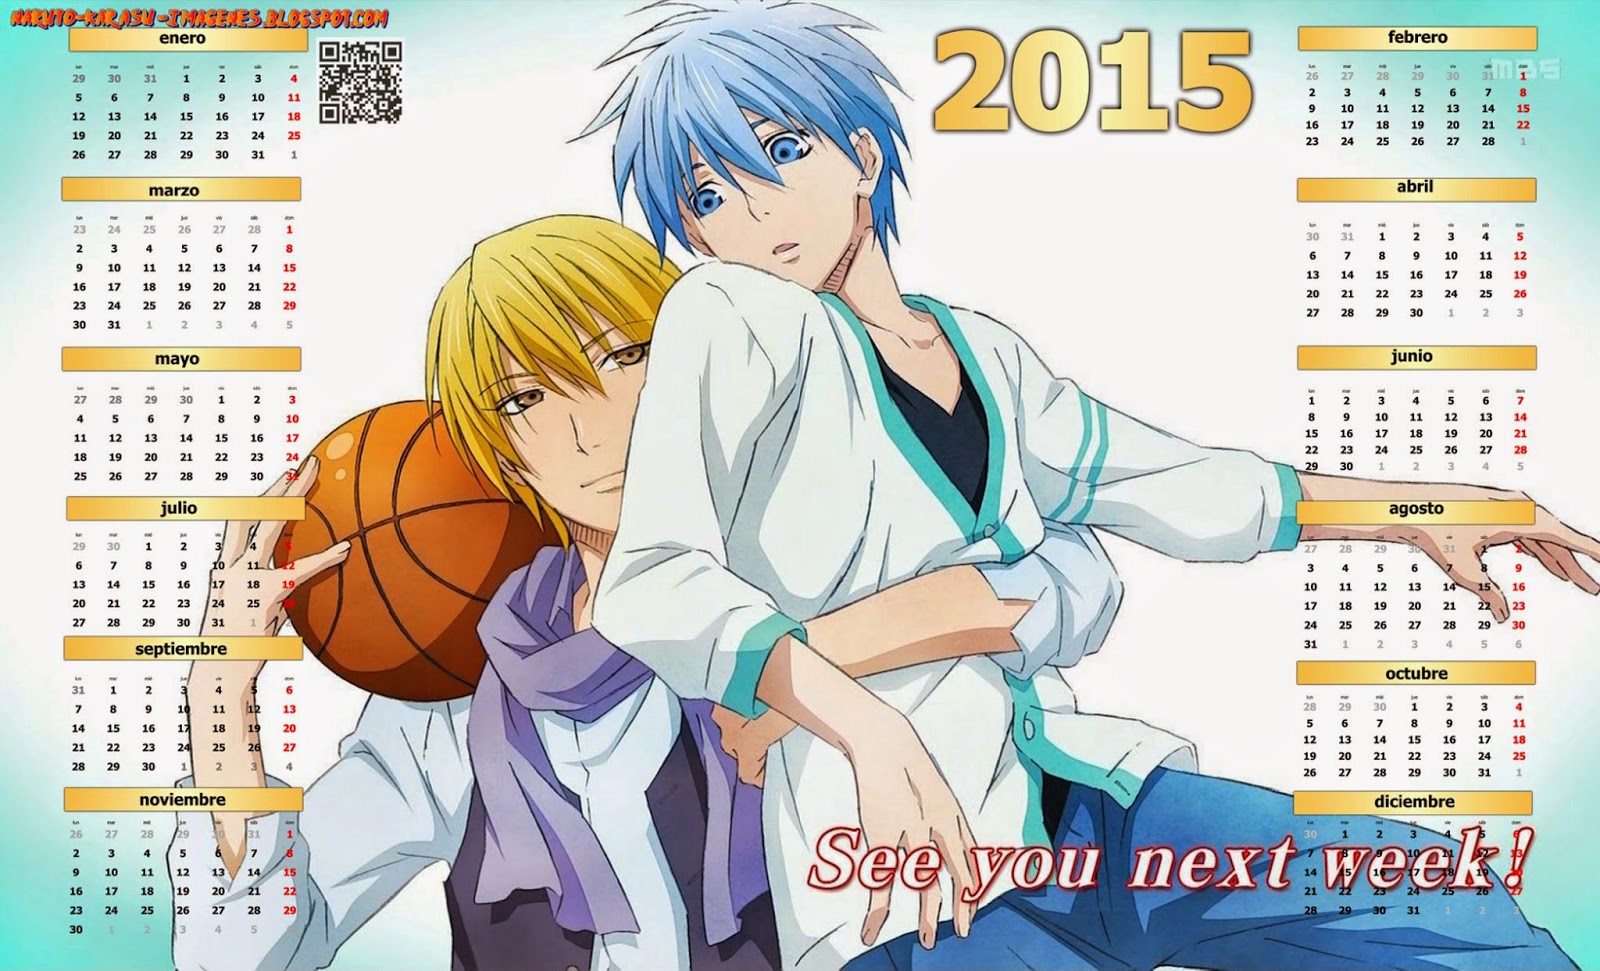 calendario anime kuroko no basket 2015